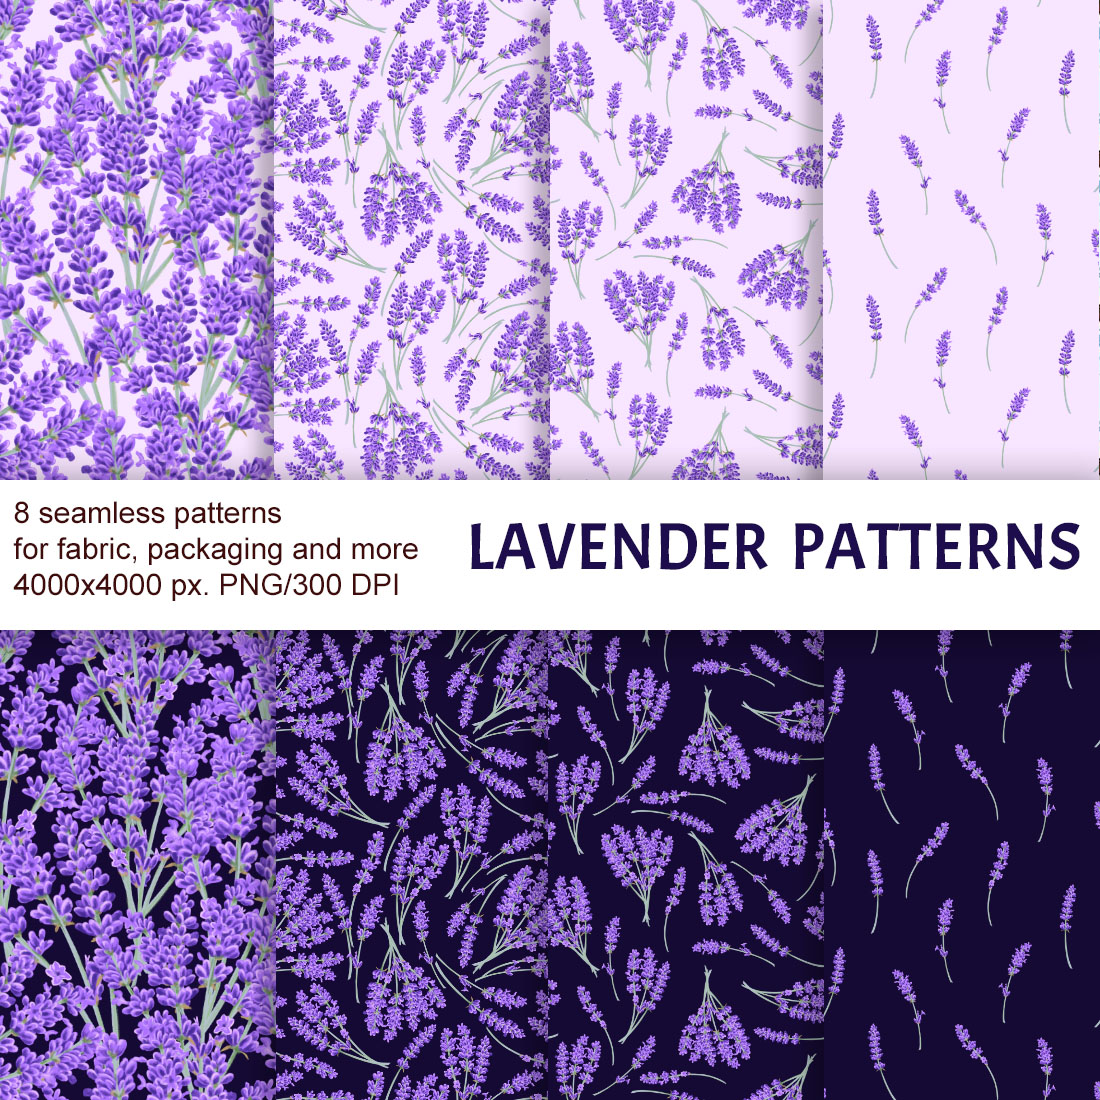 Lavender patterns cover image.